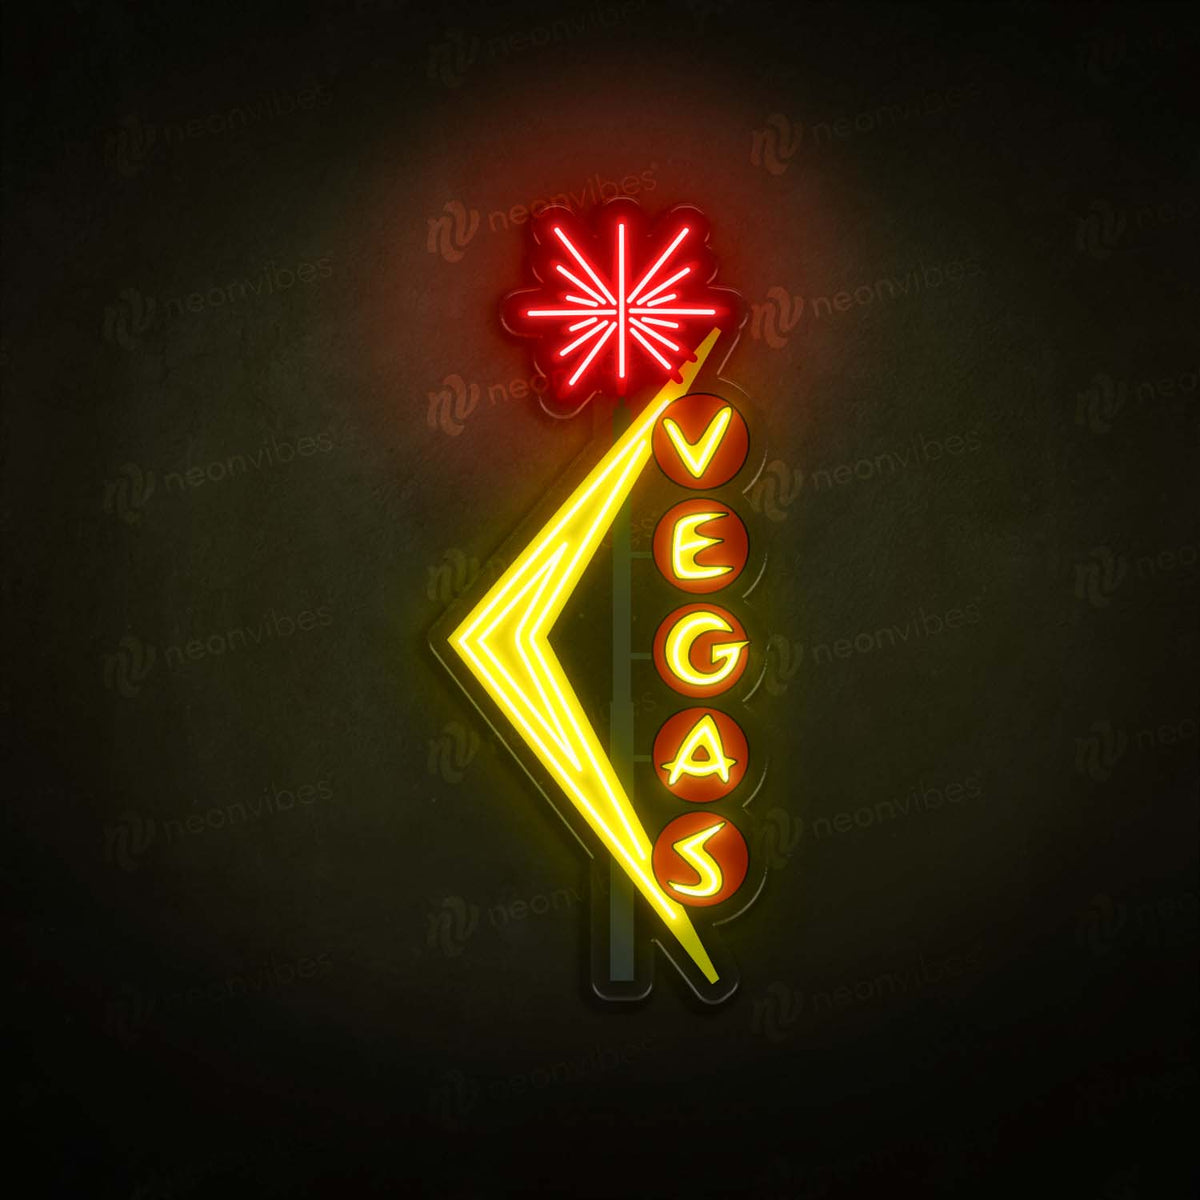 Vegas neon sign